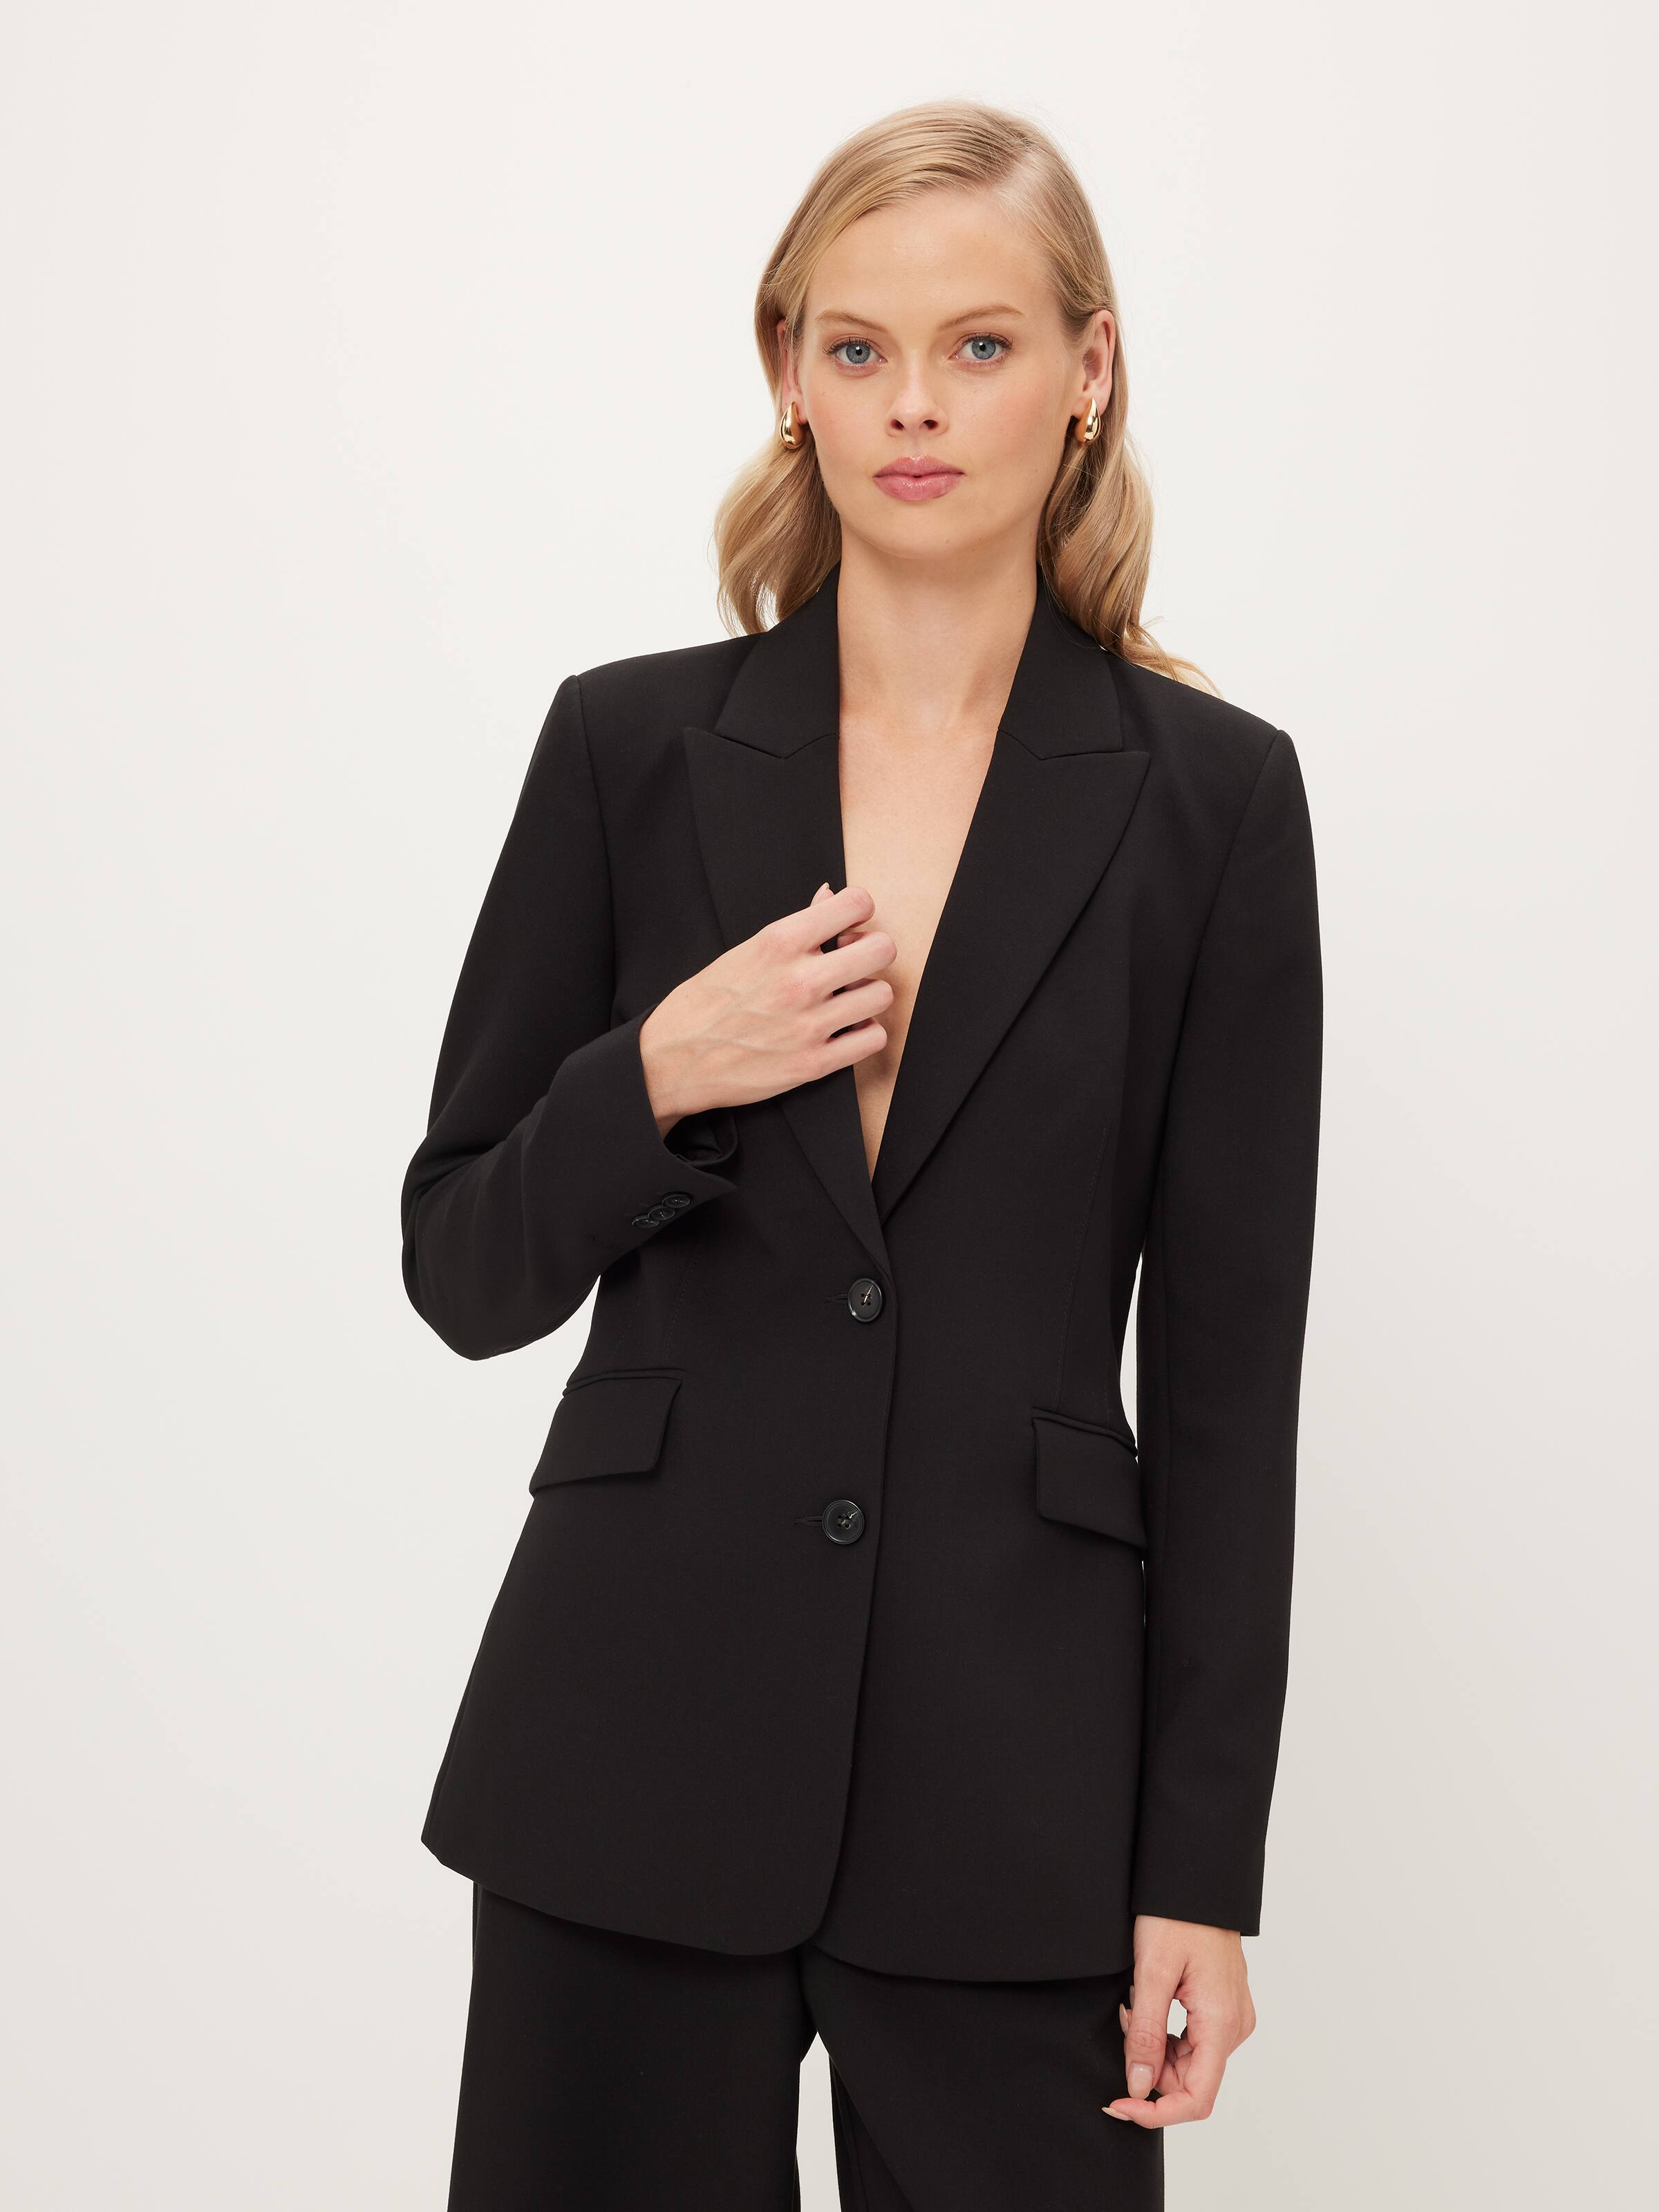 Women's Suits for sale in Rockhampton City